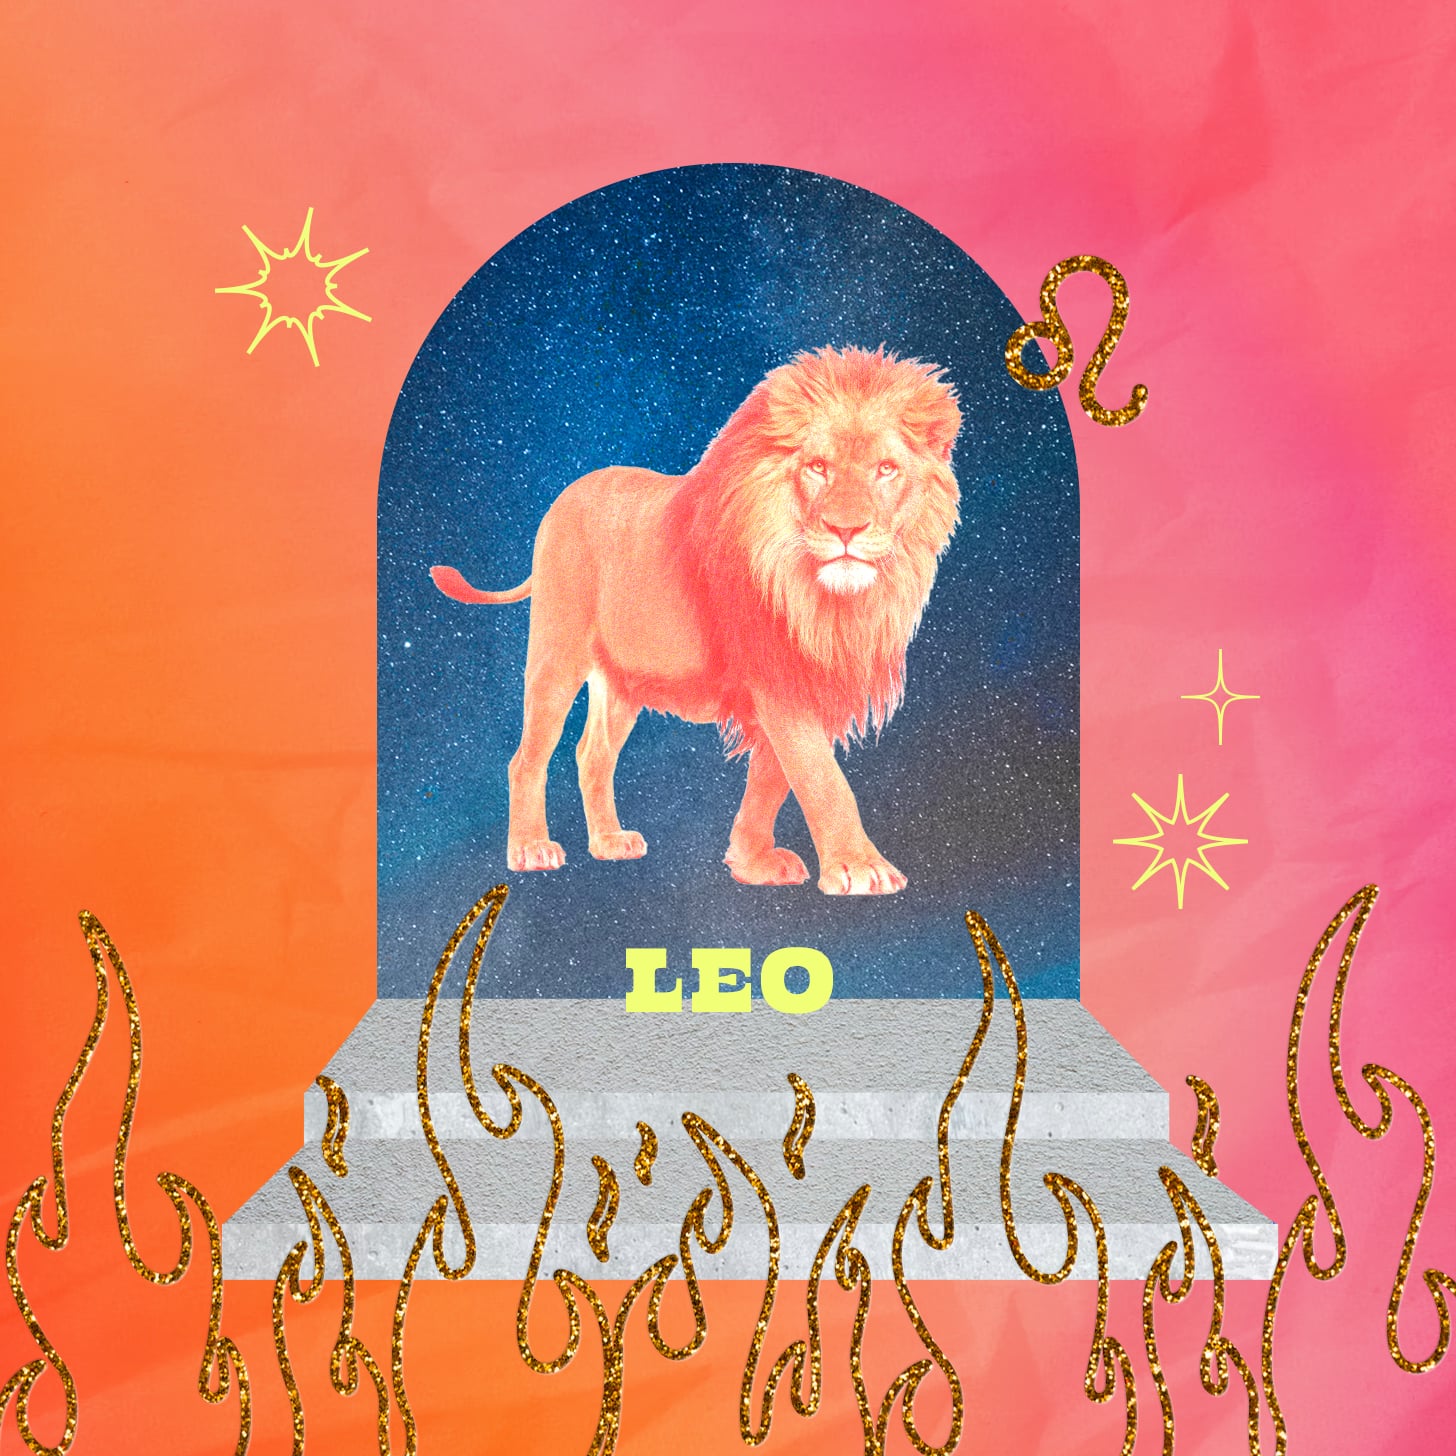 Leo weekly horoscope for July 31, 2022